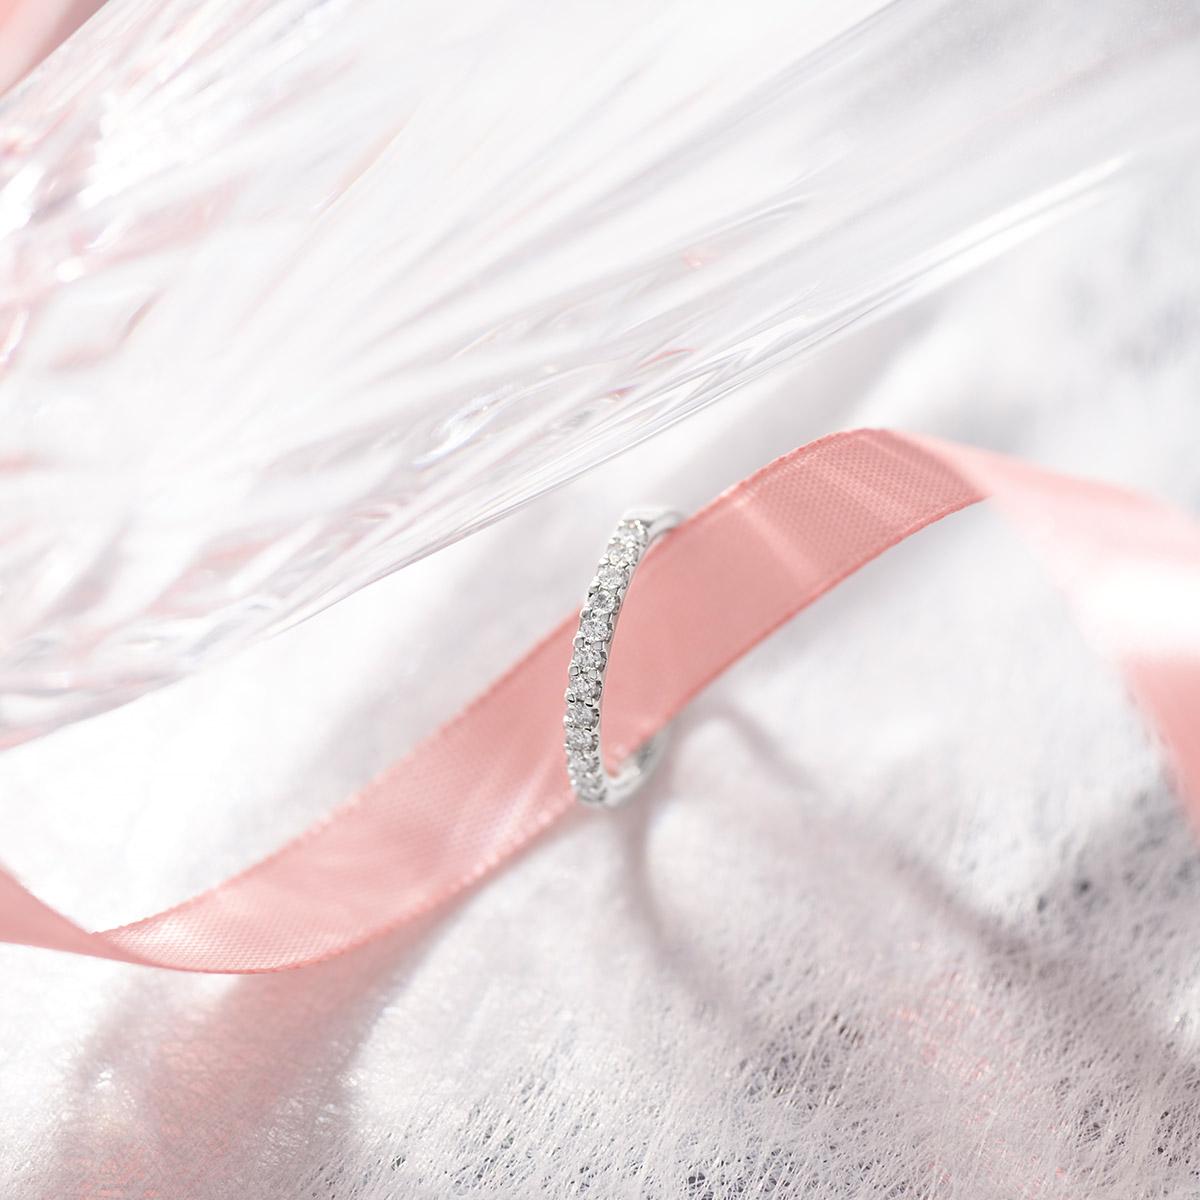 Platinum diamond ring on pink ribbon